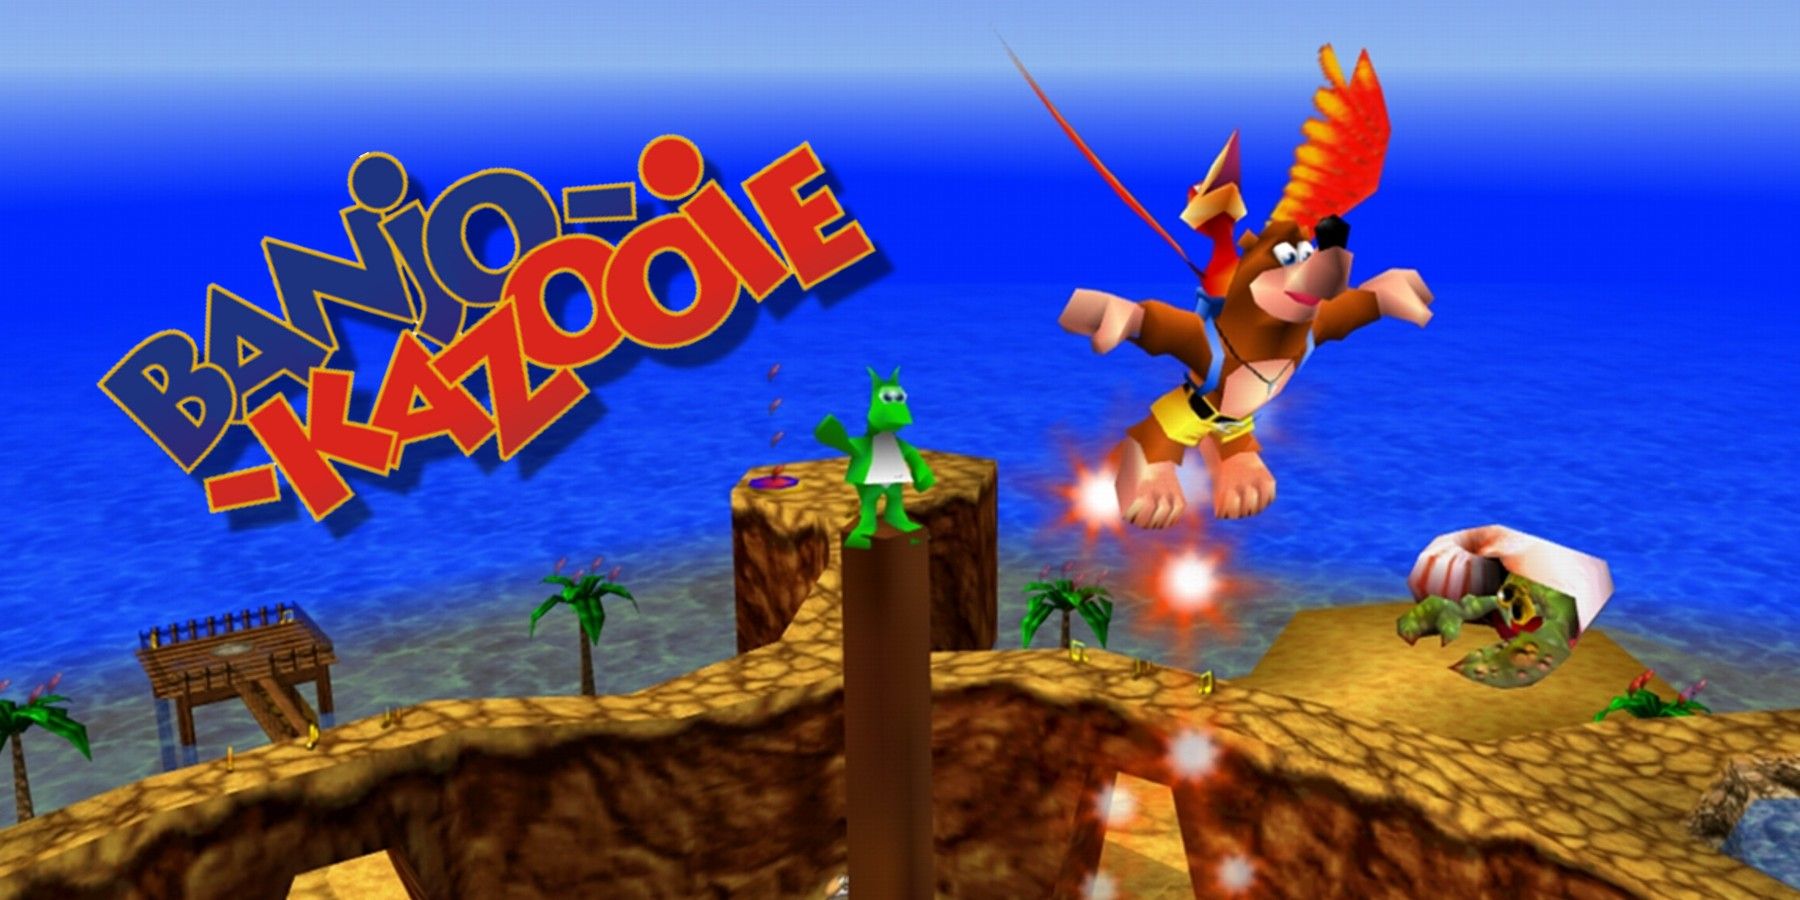 banjo-kazooie-logo-gameplay-background